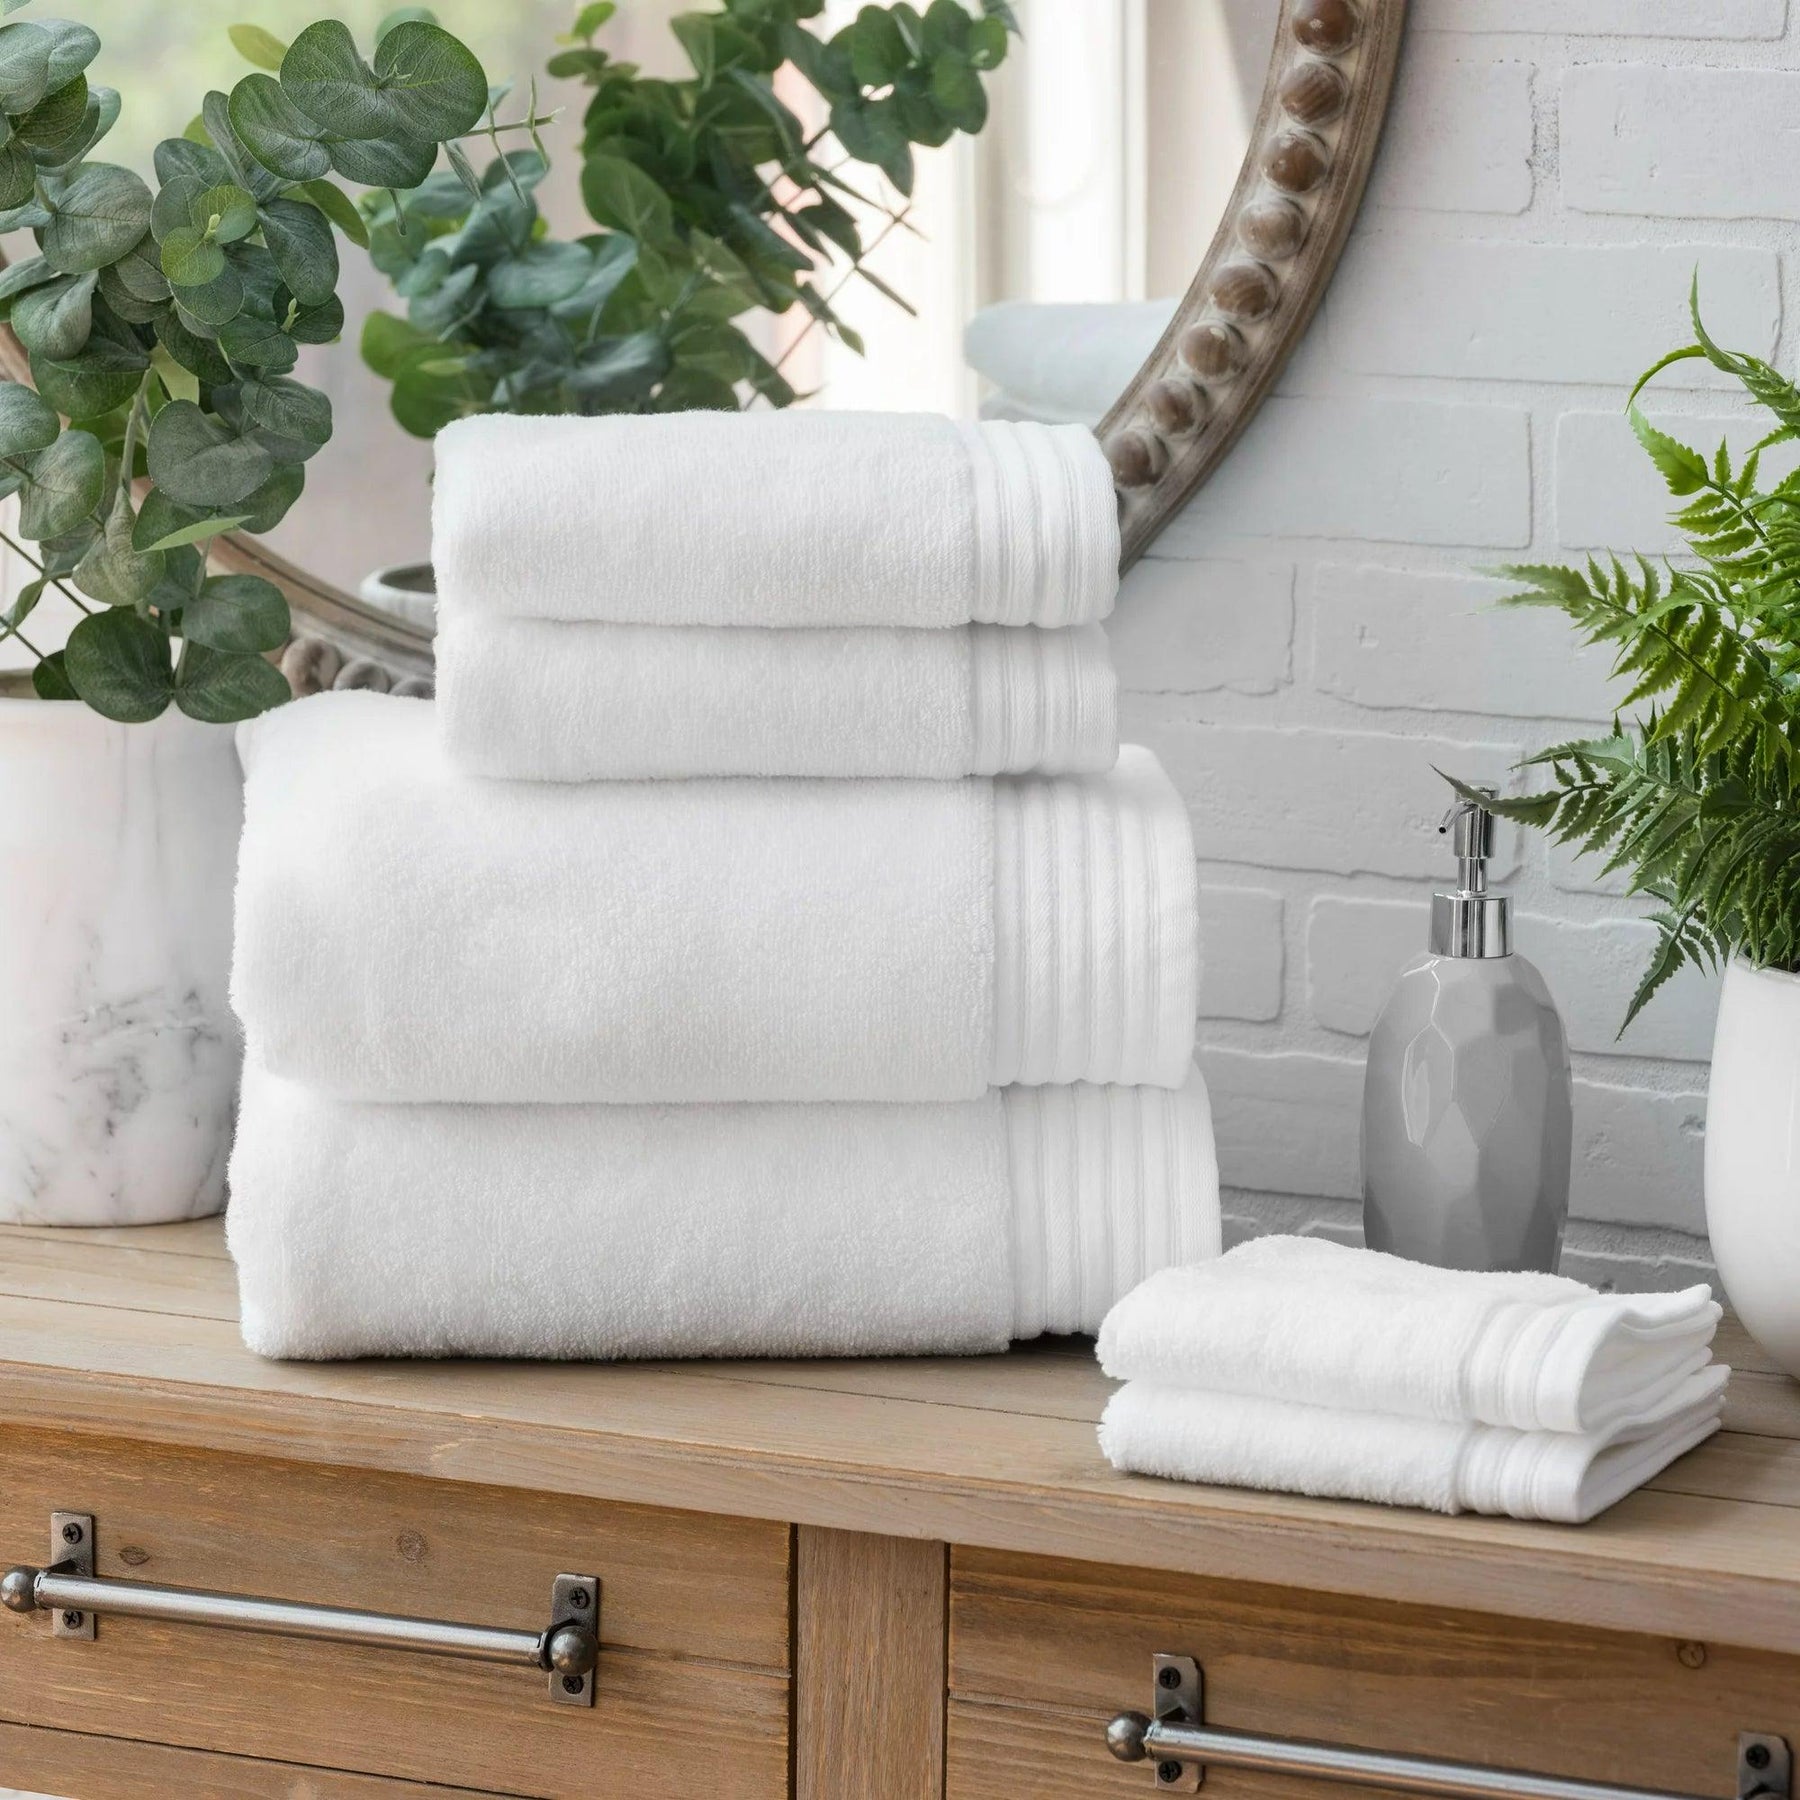 Egyptian Cotton Hand/Wash Towel Set of 4 - White - beddingbag.com